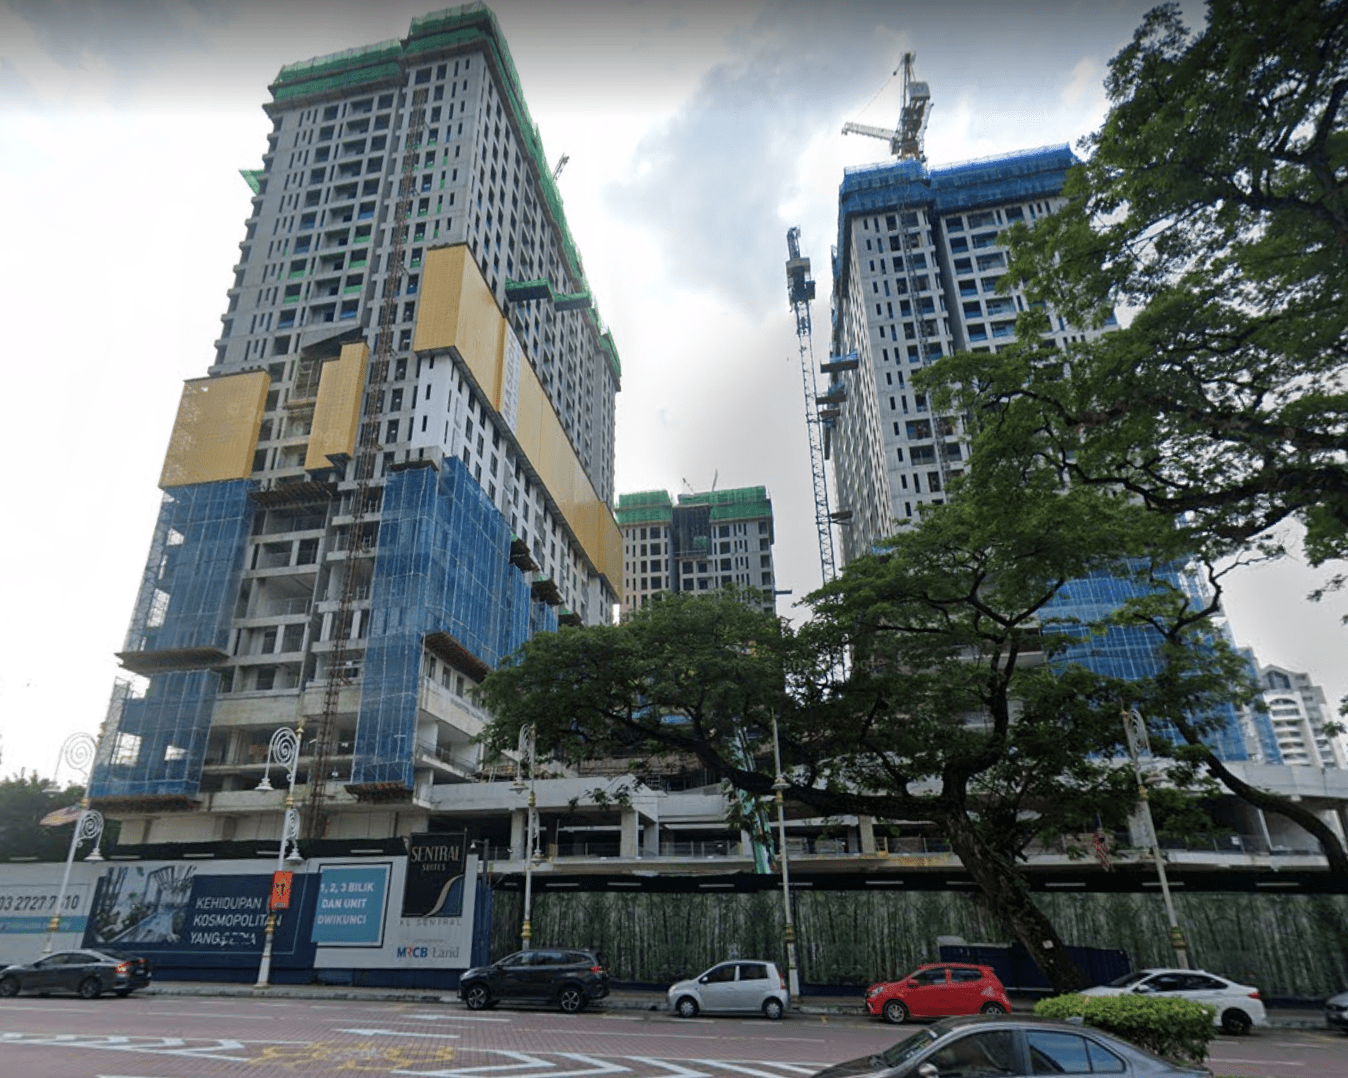 Demolished buildings in KL - construction